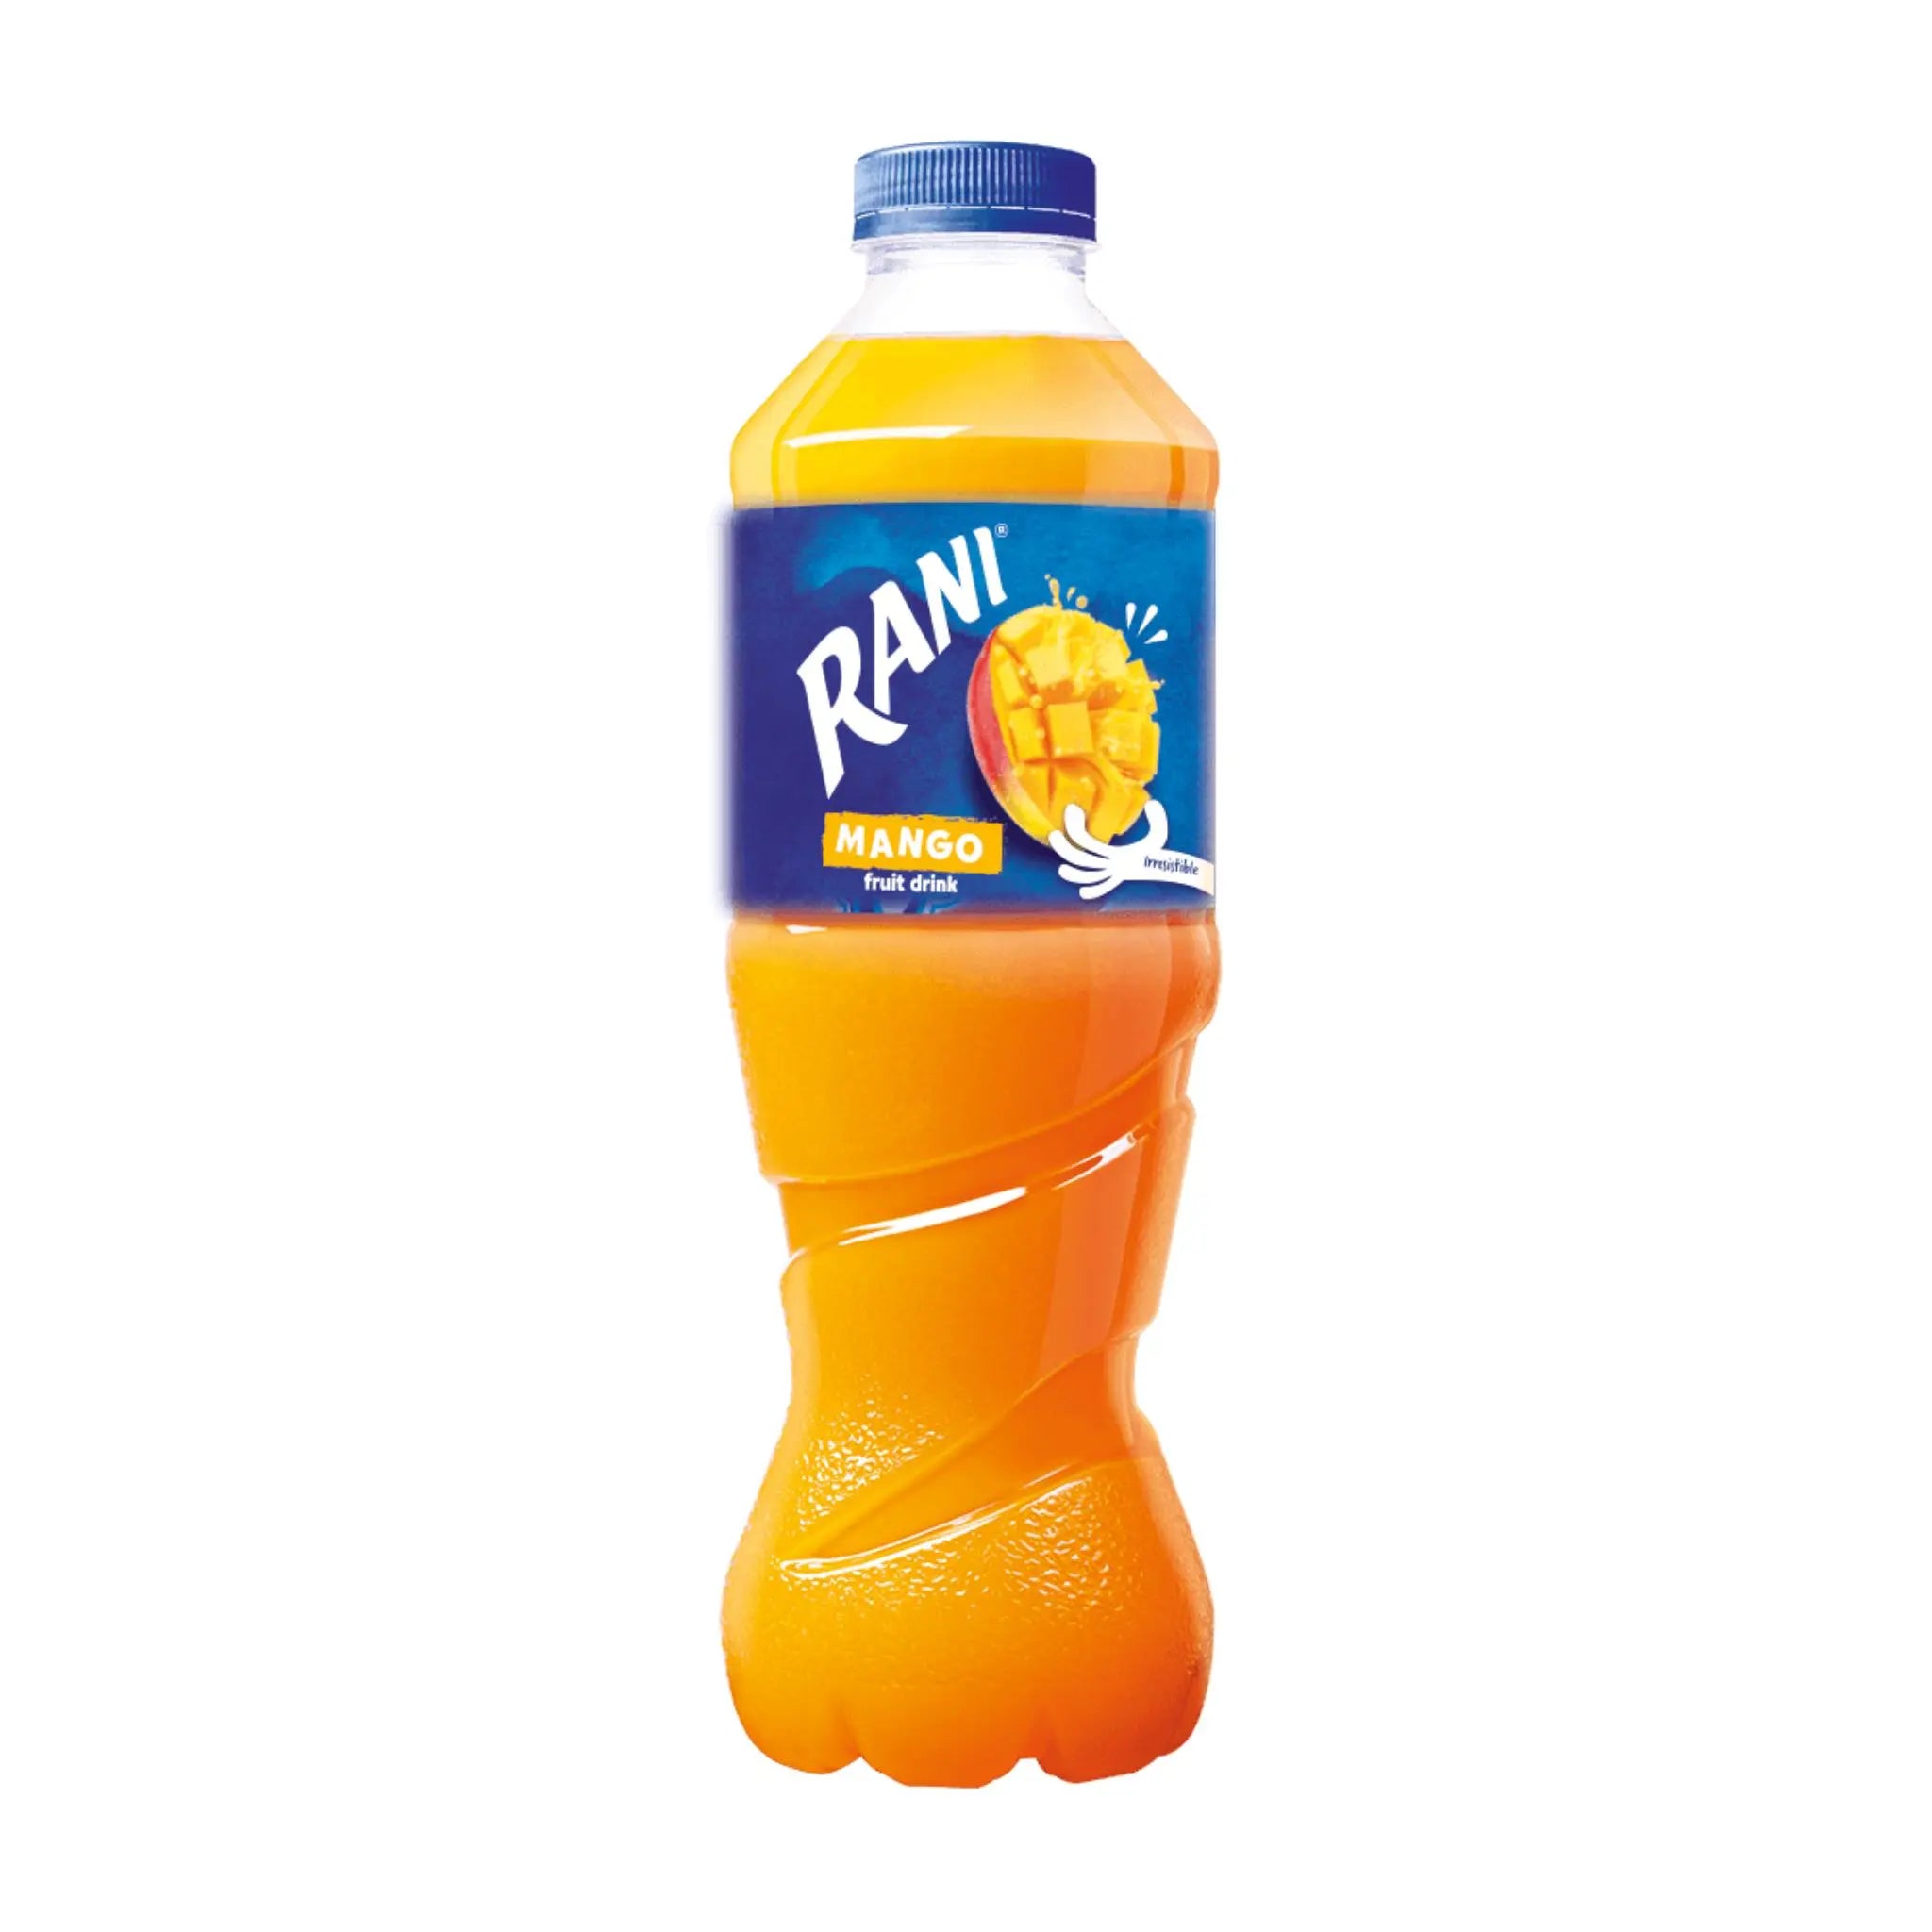 Rani Fruit Drink Mango 1.5L PET - 6x1.5L (1 carton) Marino.AE